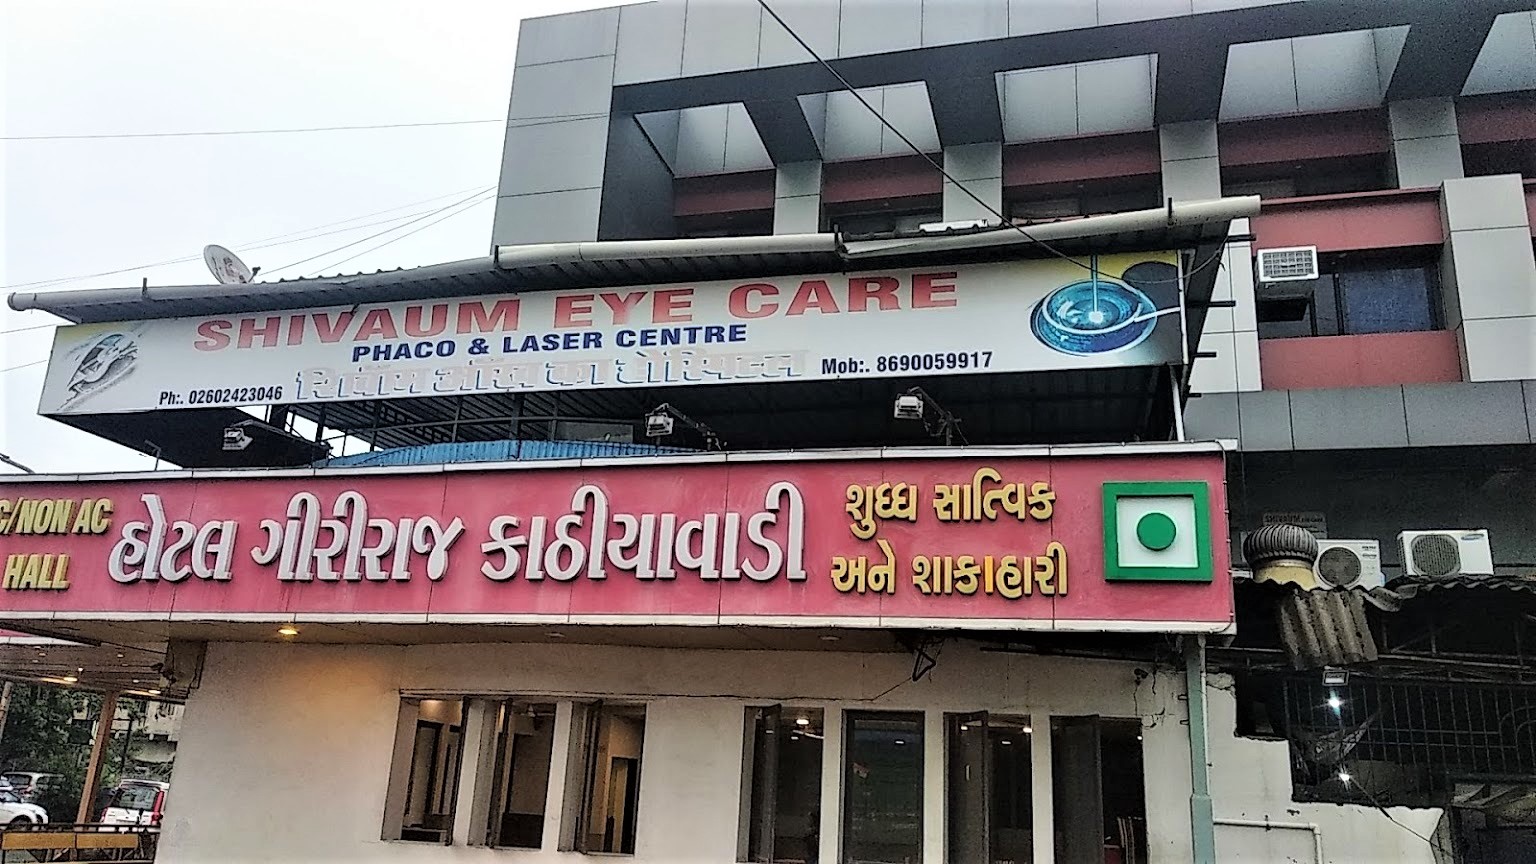 Shivaum Eye Care